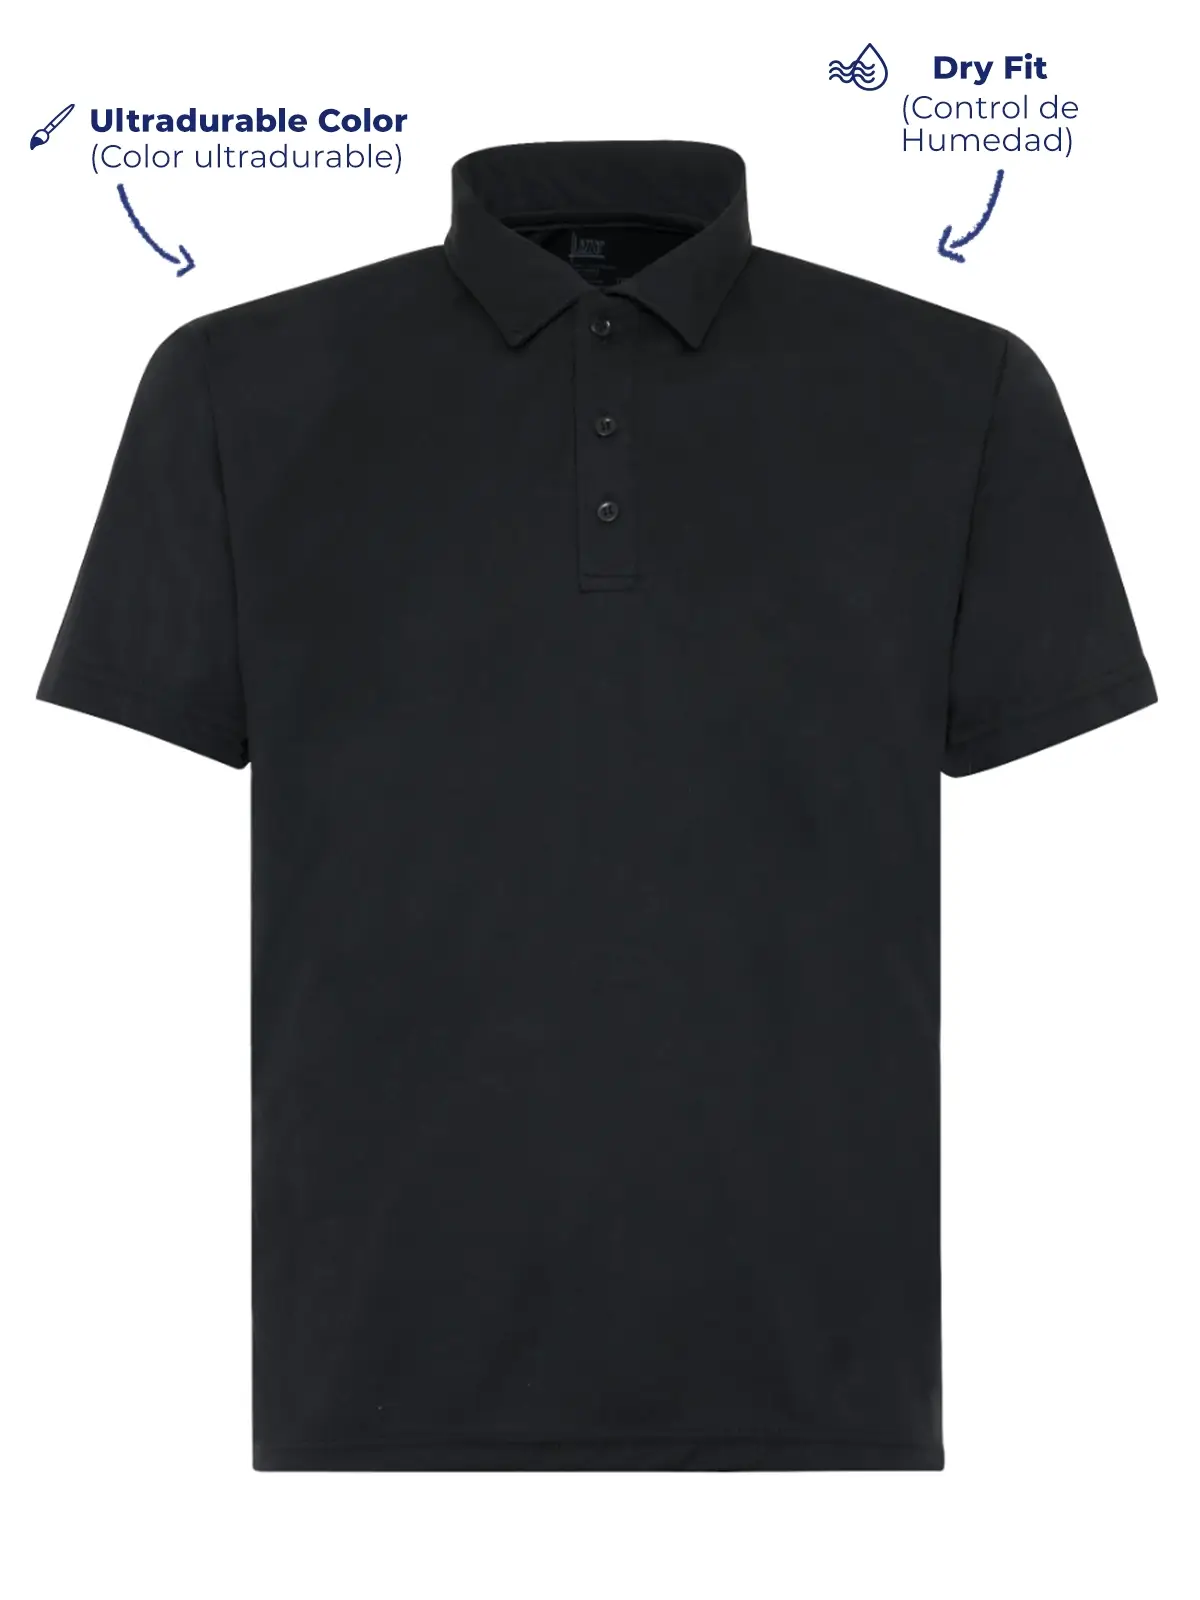 Men's P 900 dry fit polo shirt black front view